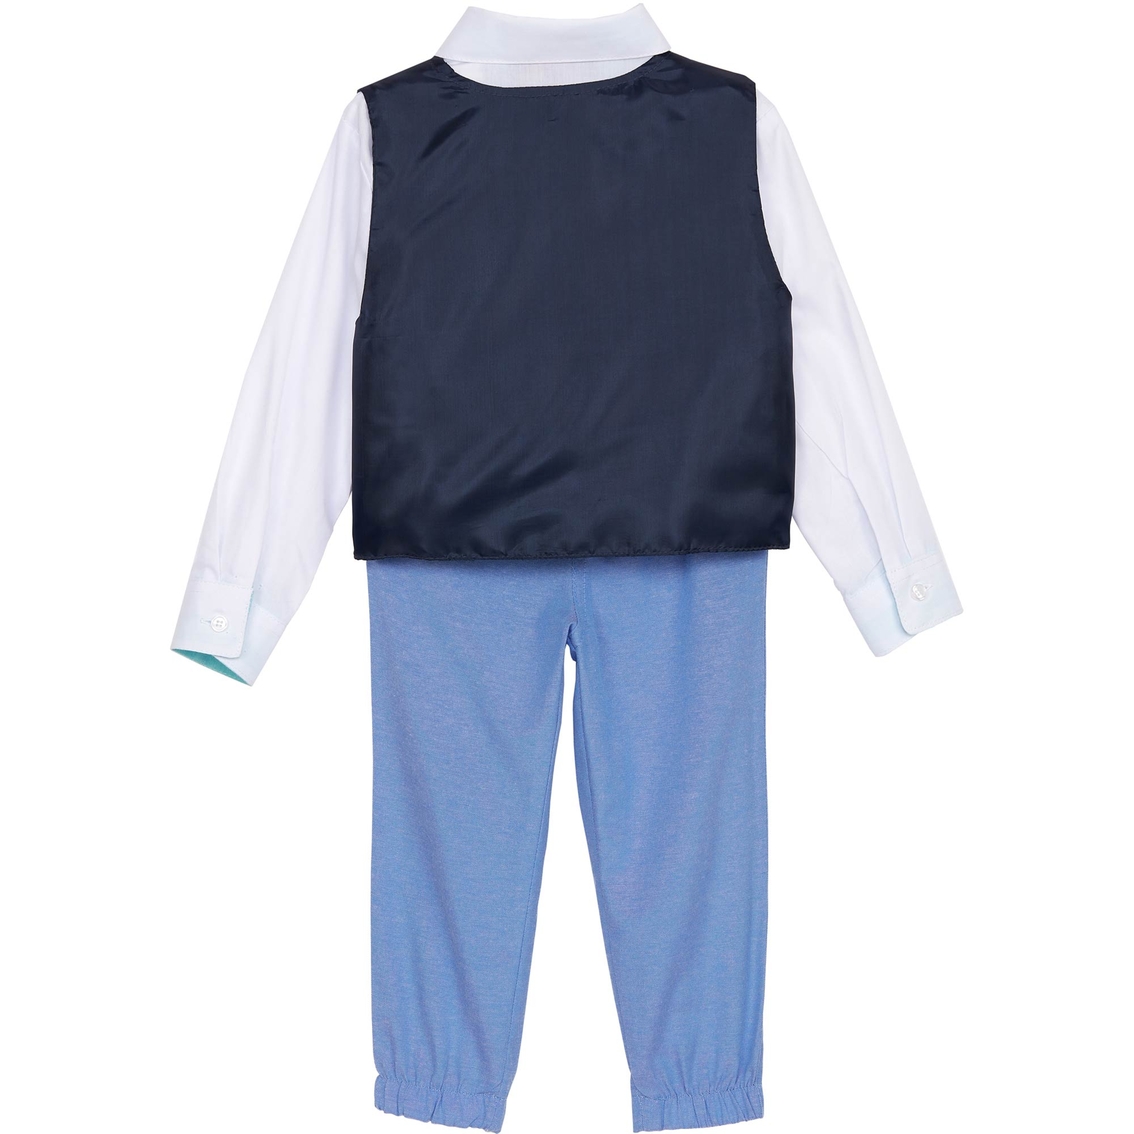 Happy Fella Toddler Boys Navy Woven Vest, Shirt, Bowtie/Hanky, Pants 4 pc. Set - Image 2 of 2